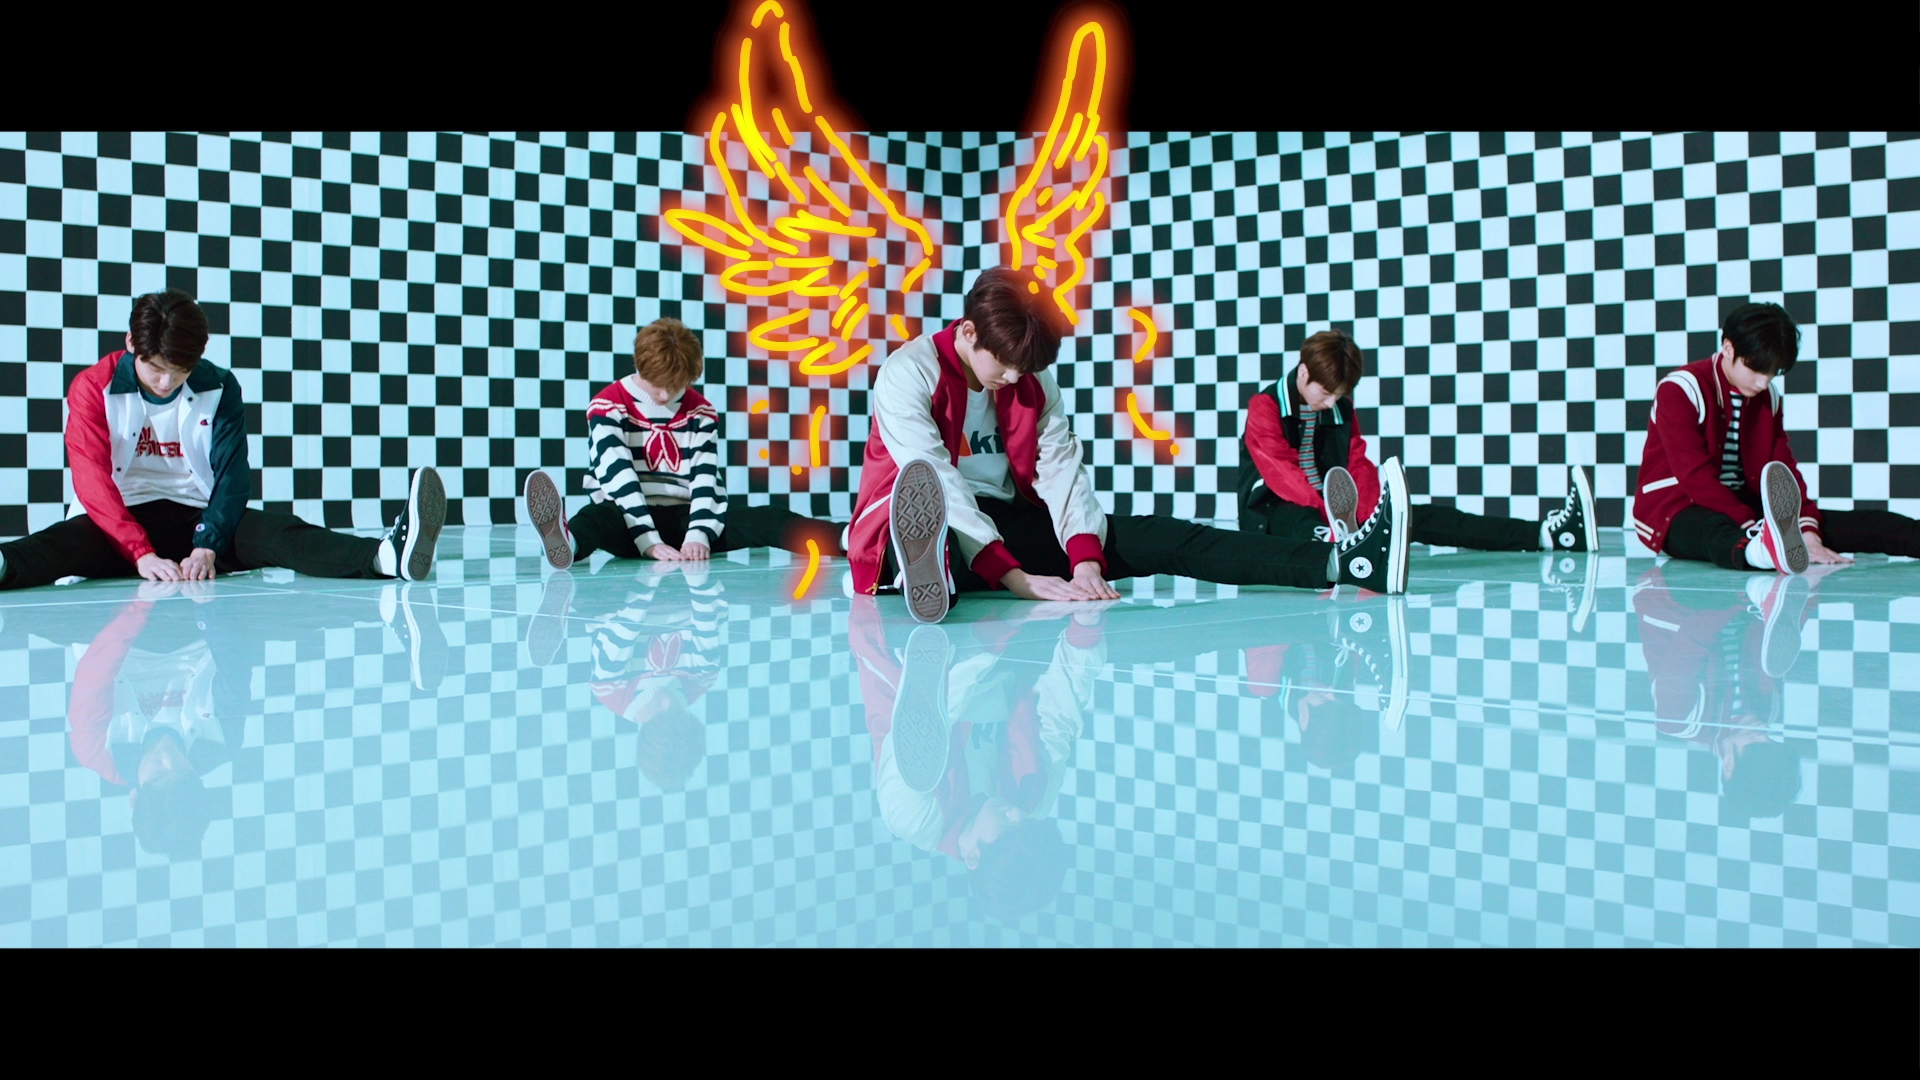 TXT (투모로우바이투게더) '어느날 머리에서 뿔이 자랐다 (CROWN)' Official MV (Choreography Version)